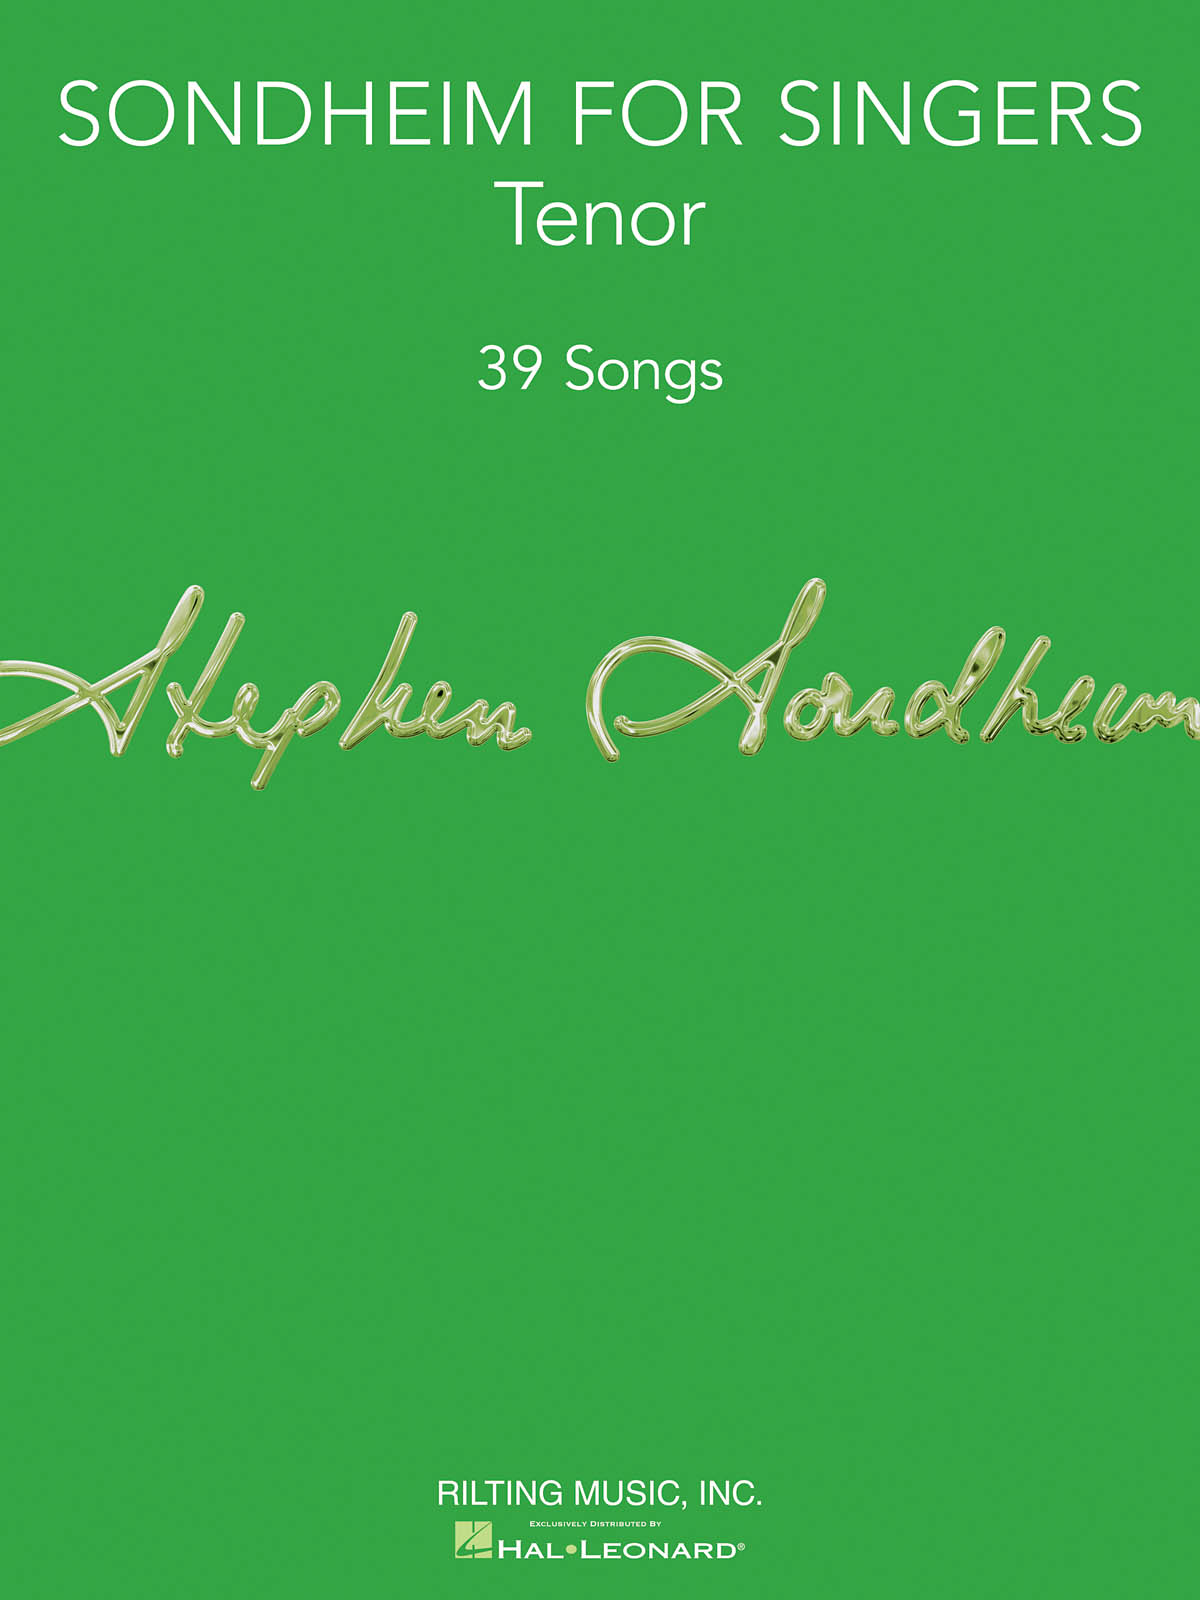 Sondheim for Singers - Tenor Vocal Collection - 39 Songs - noty pro tenor saxofon